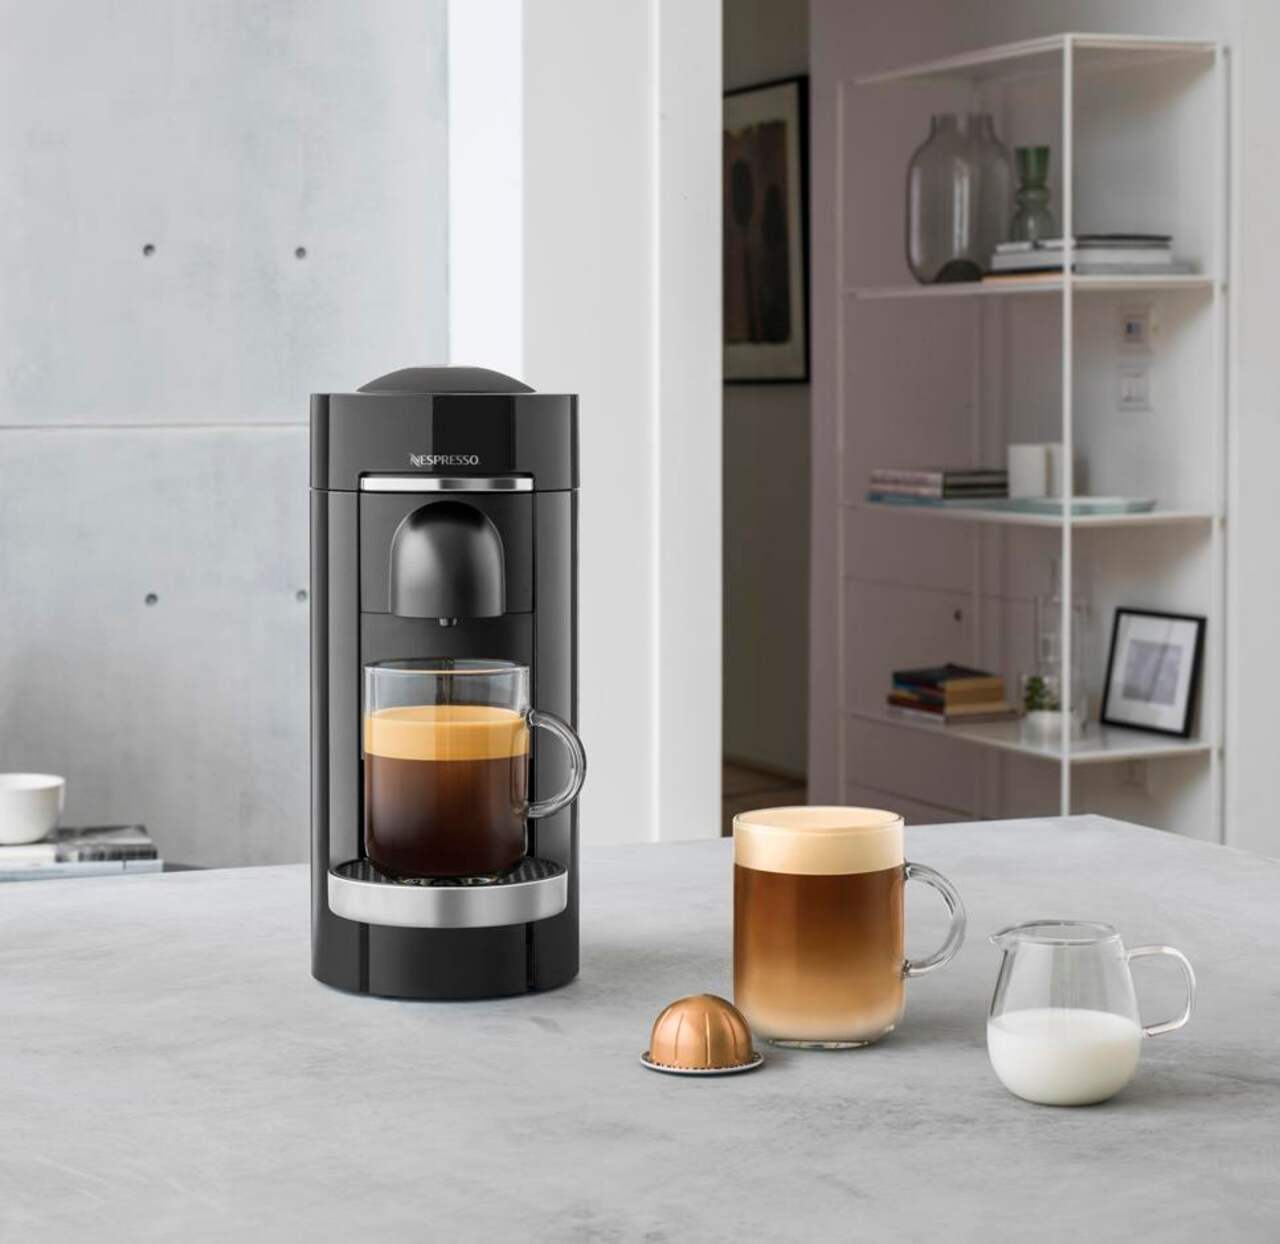 Nespresso Vertuo Plus Coffee and Espresso Maker with Aeroccino Milk Frother  